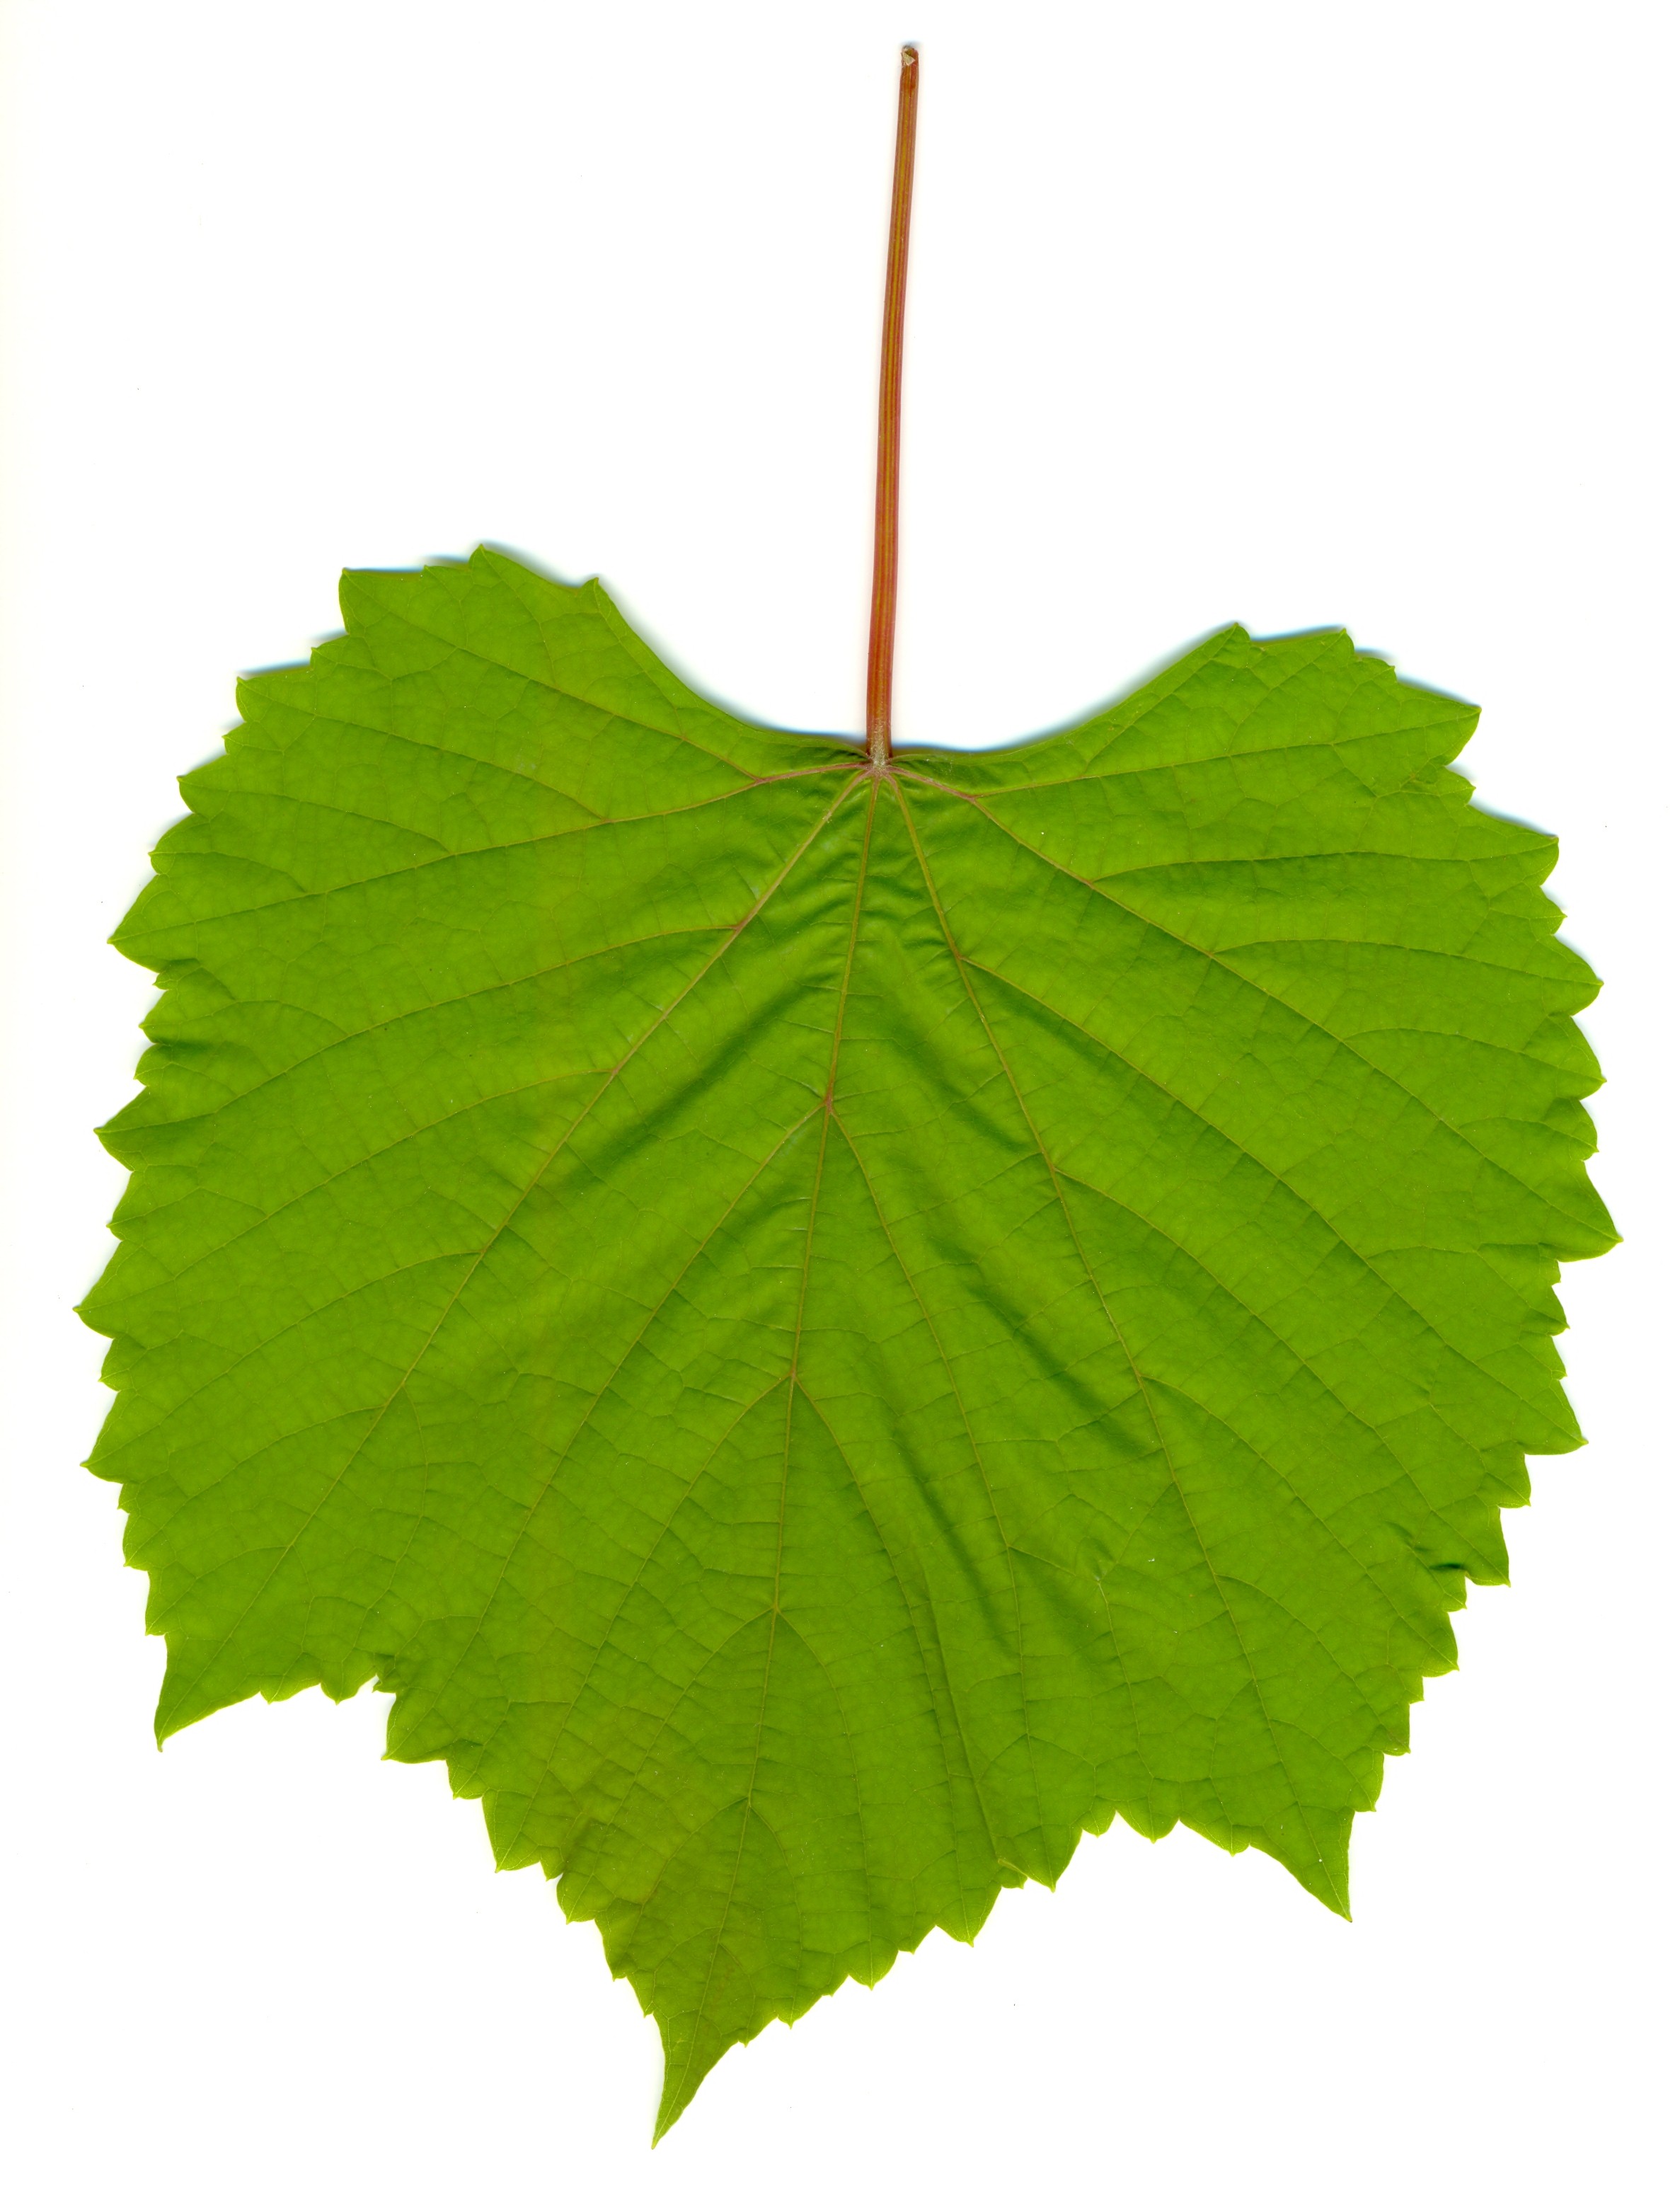 Grape leaf 01.jpg - ClipArt Best - ClipArt Best